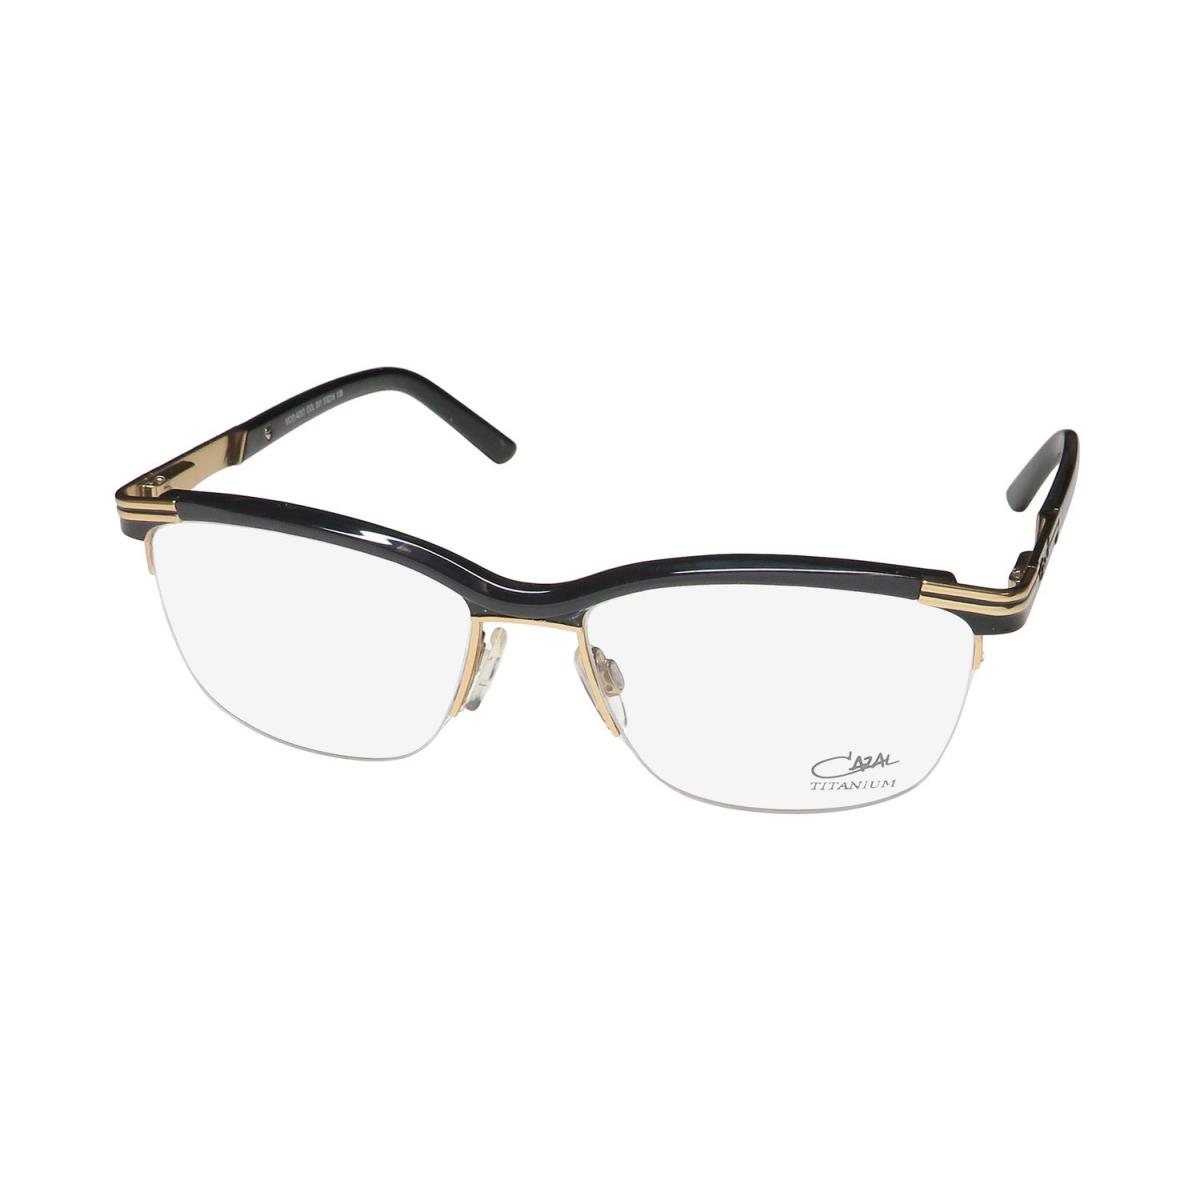 Cazal 4253 Titanium Made IN Germany NO Allergy Materials Eyeglass Frame/eyewear Black / Gold